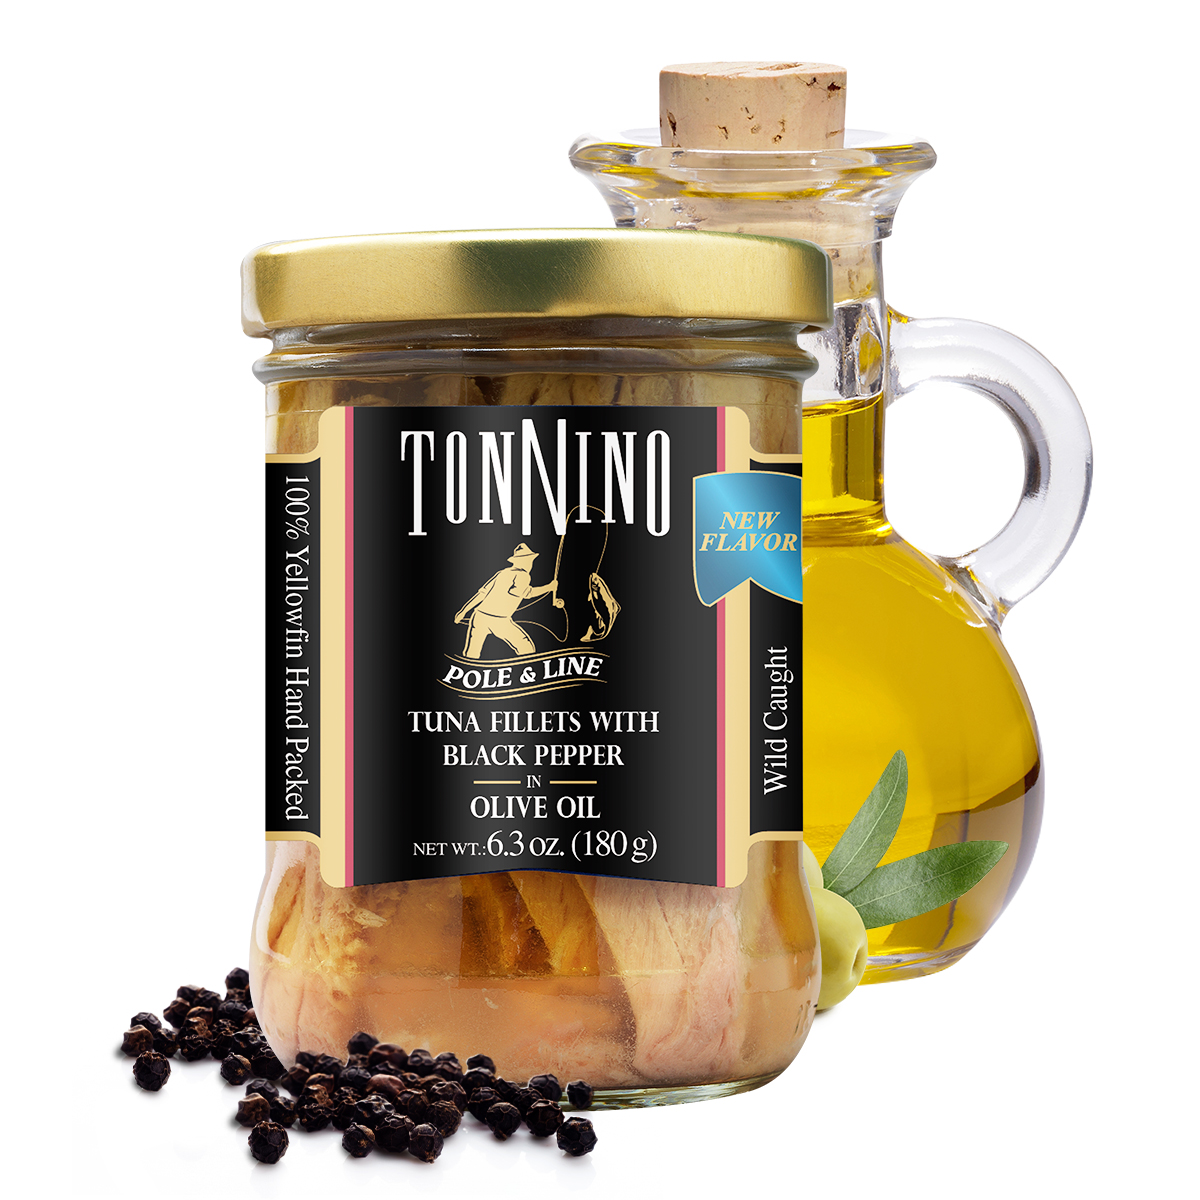 Tonnino Tuna Black Pepper in Olive Oil, 6.3 oz